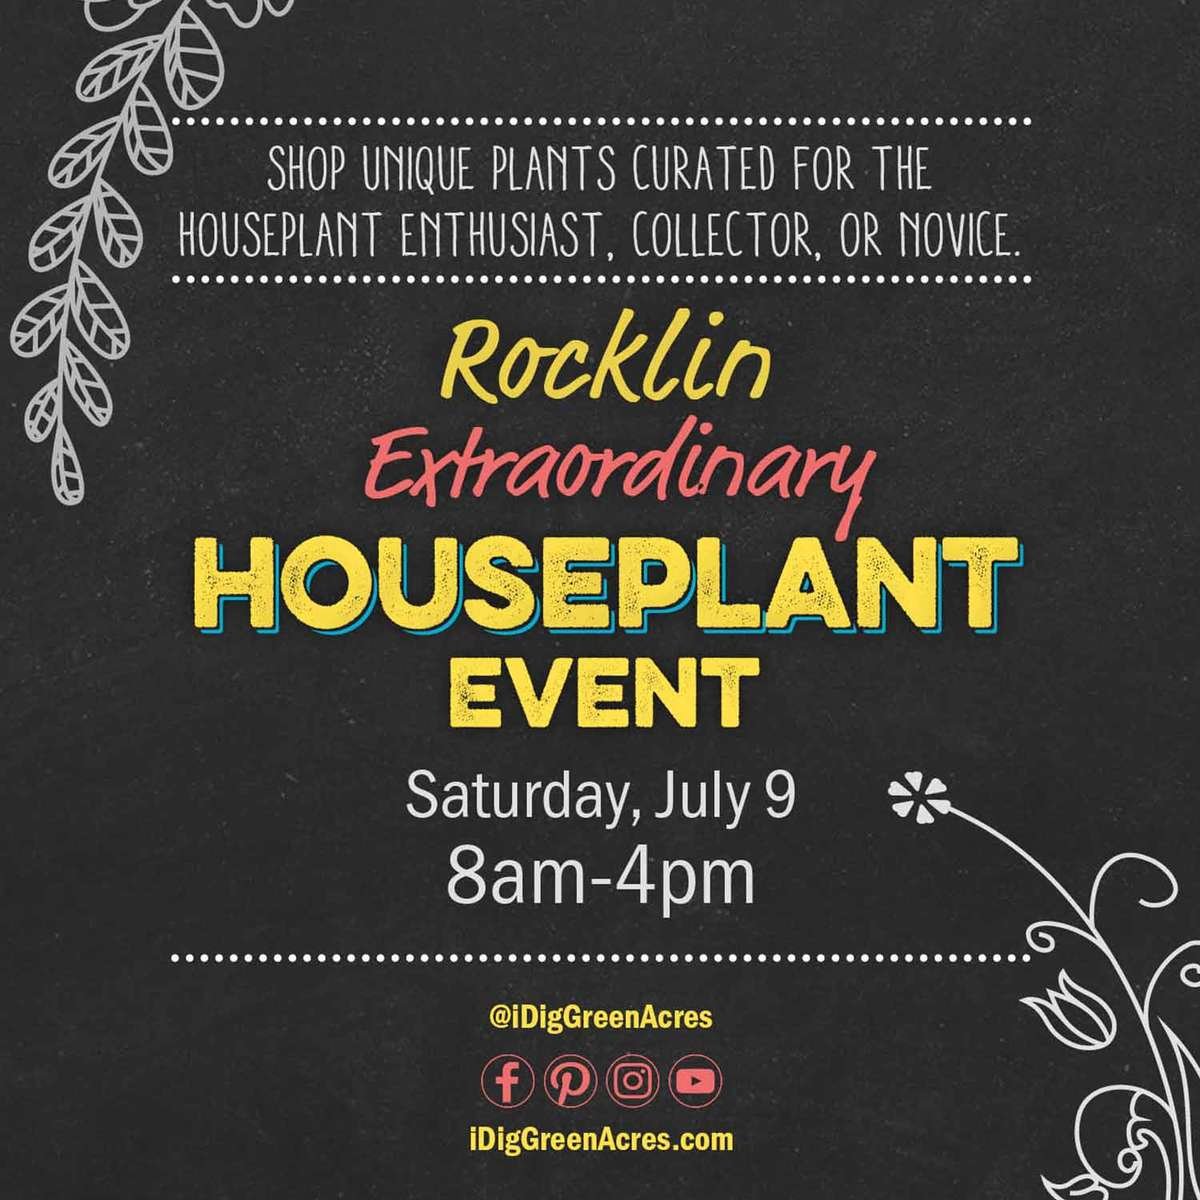 Rocklin Extraordinary Houseplant Event Saturday July 9 8am-4pm